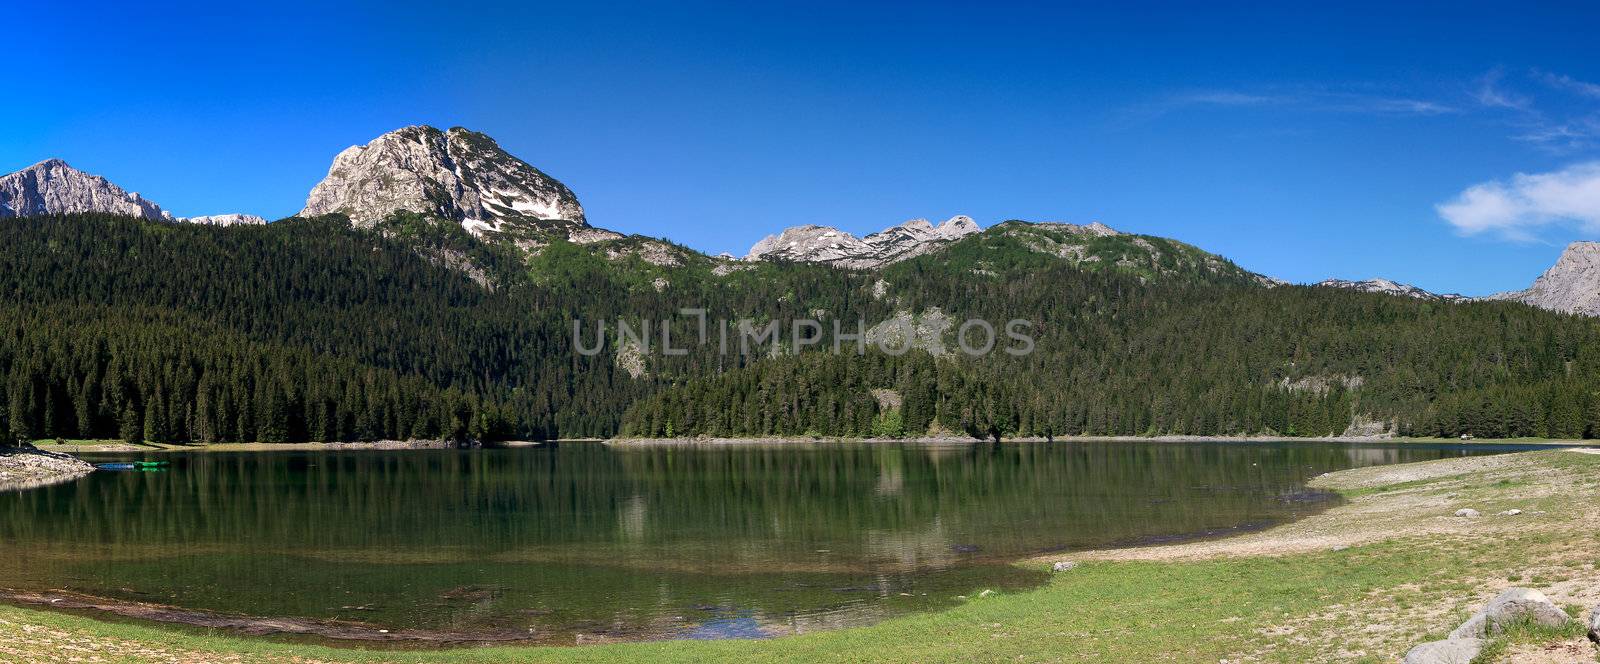 panorama of mountain lake by marivlada